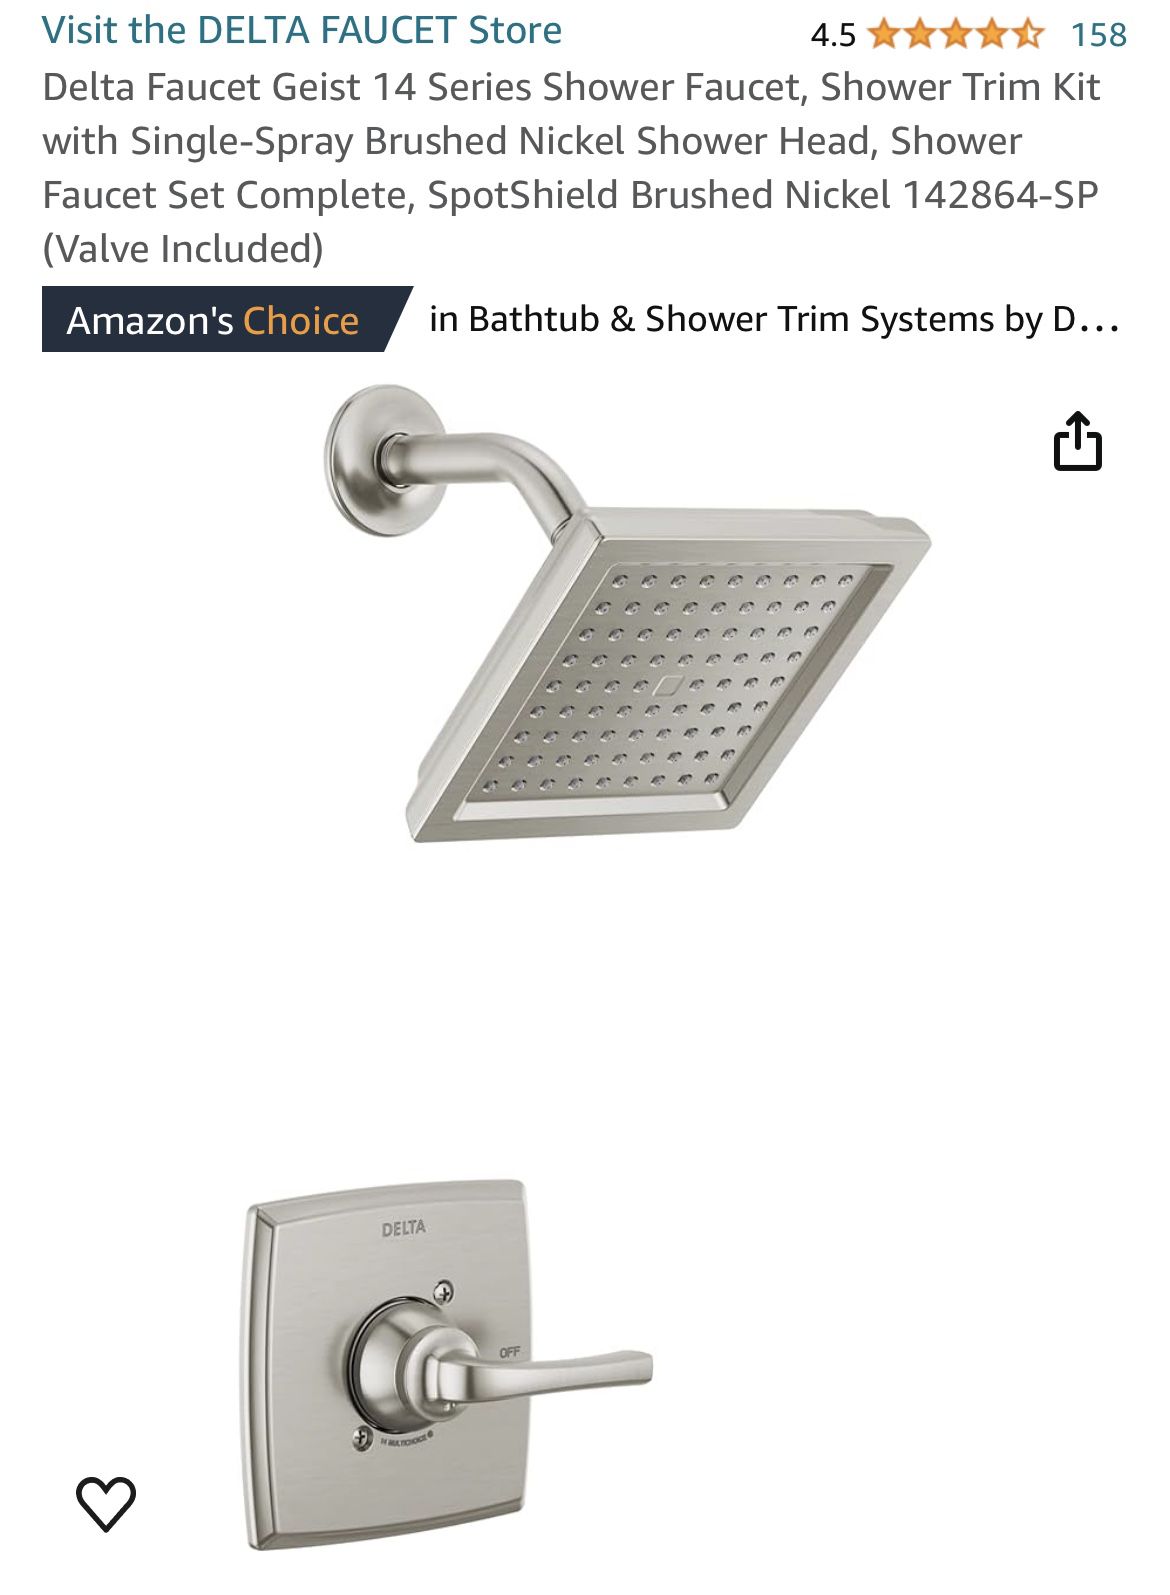 Delta Faucet Geist 14 Series Shower Faucet, Shower Trim Kit with Single-Spray Brushed Nickel Shower Head, Shower Faucet Set Complete, SpotShield Brush